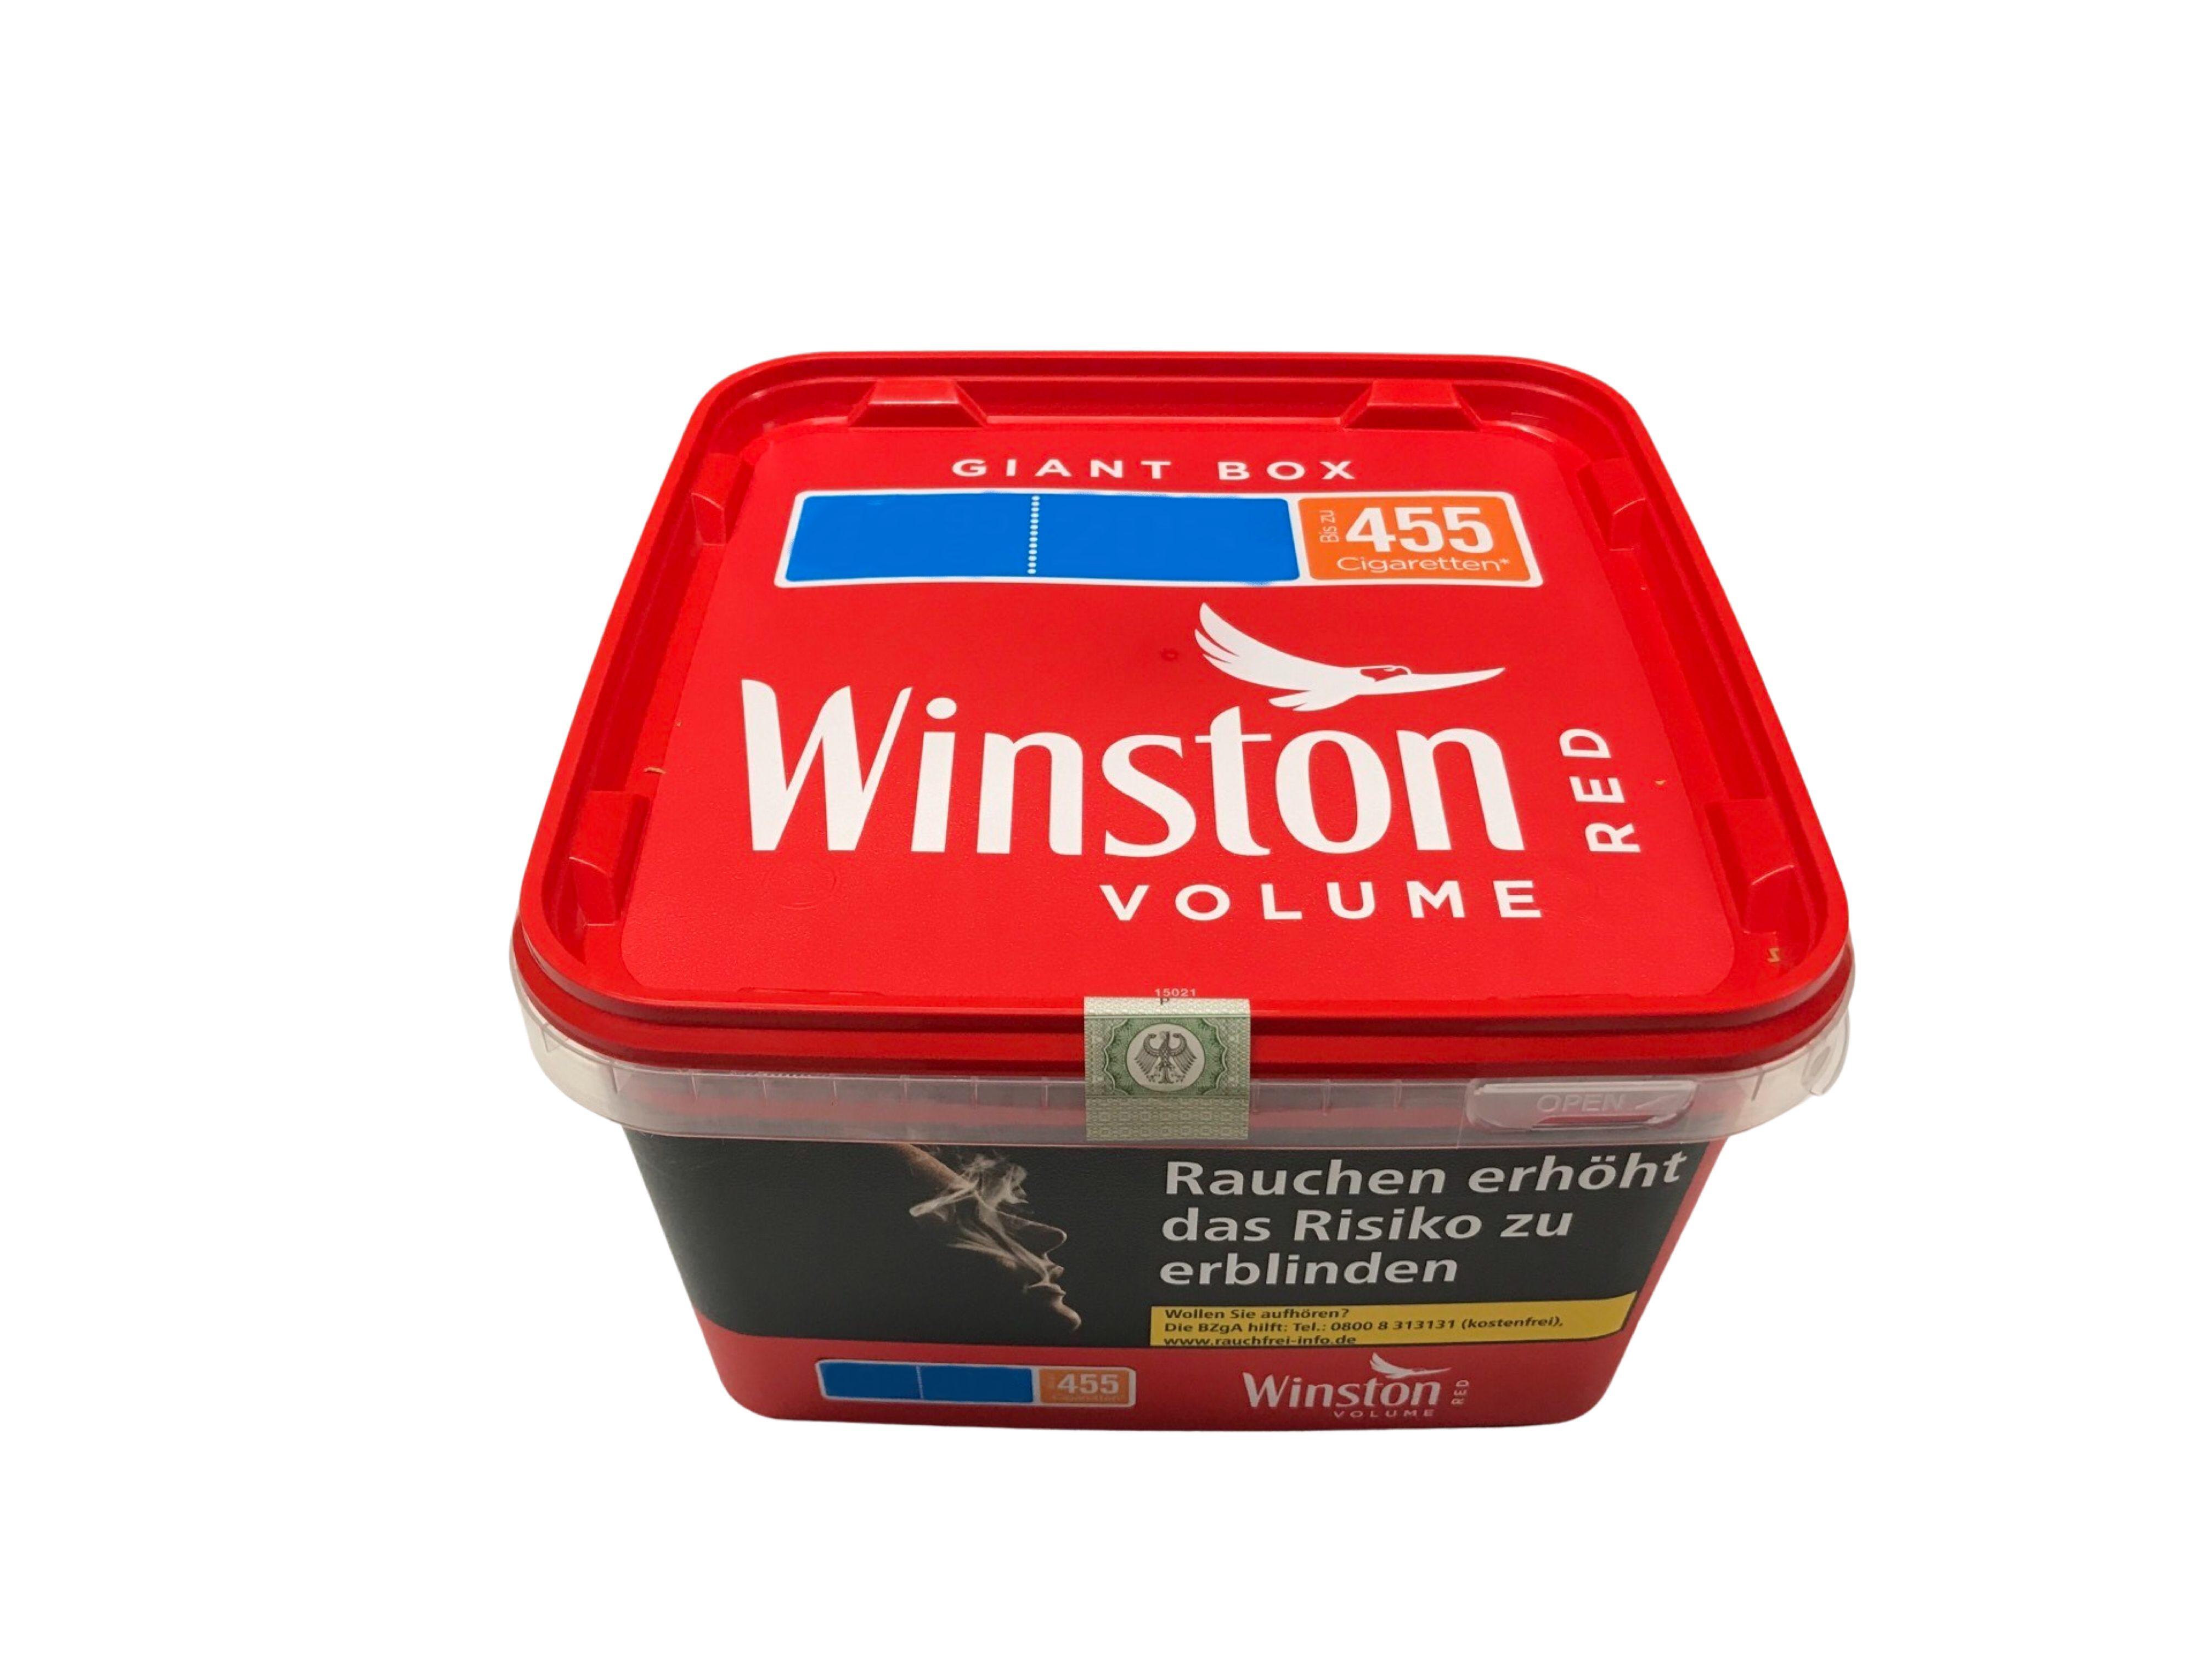 WINSTON Volumen Red Giant Box